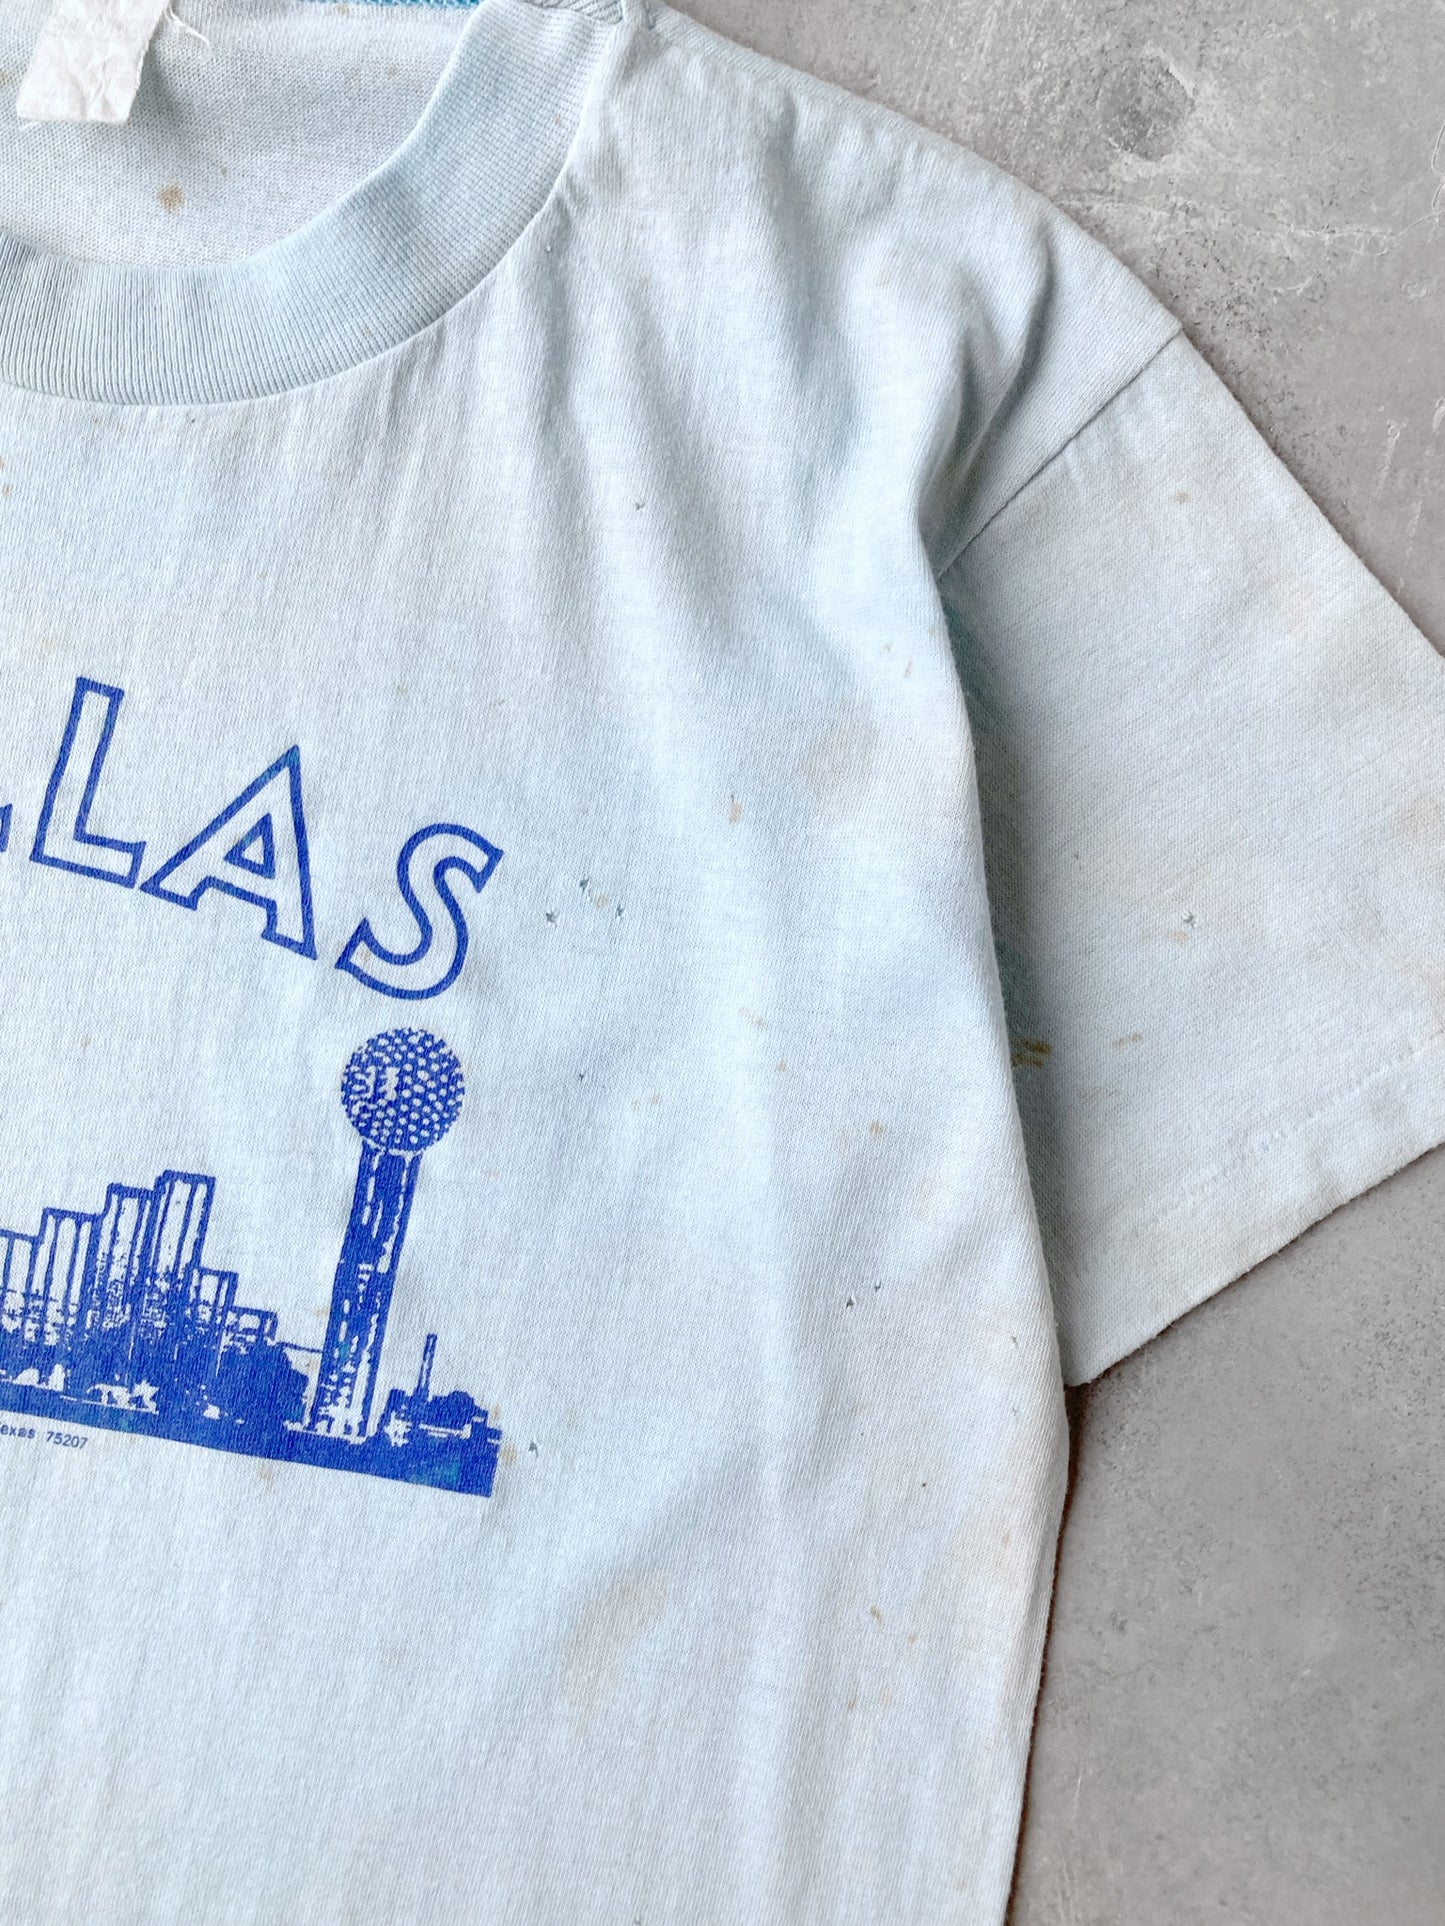 Dallas, Texas Skyline T-Shirt 80's - Medium